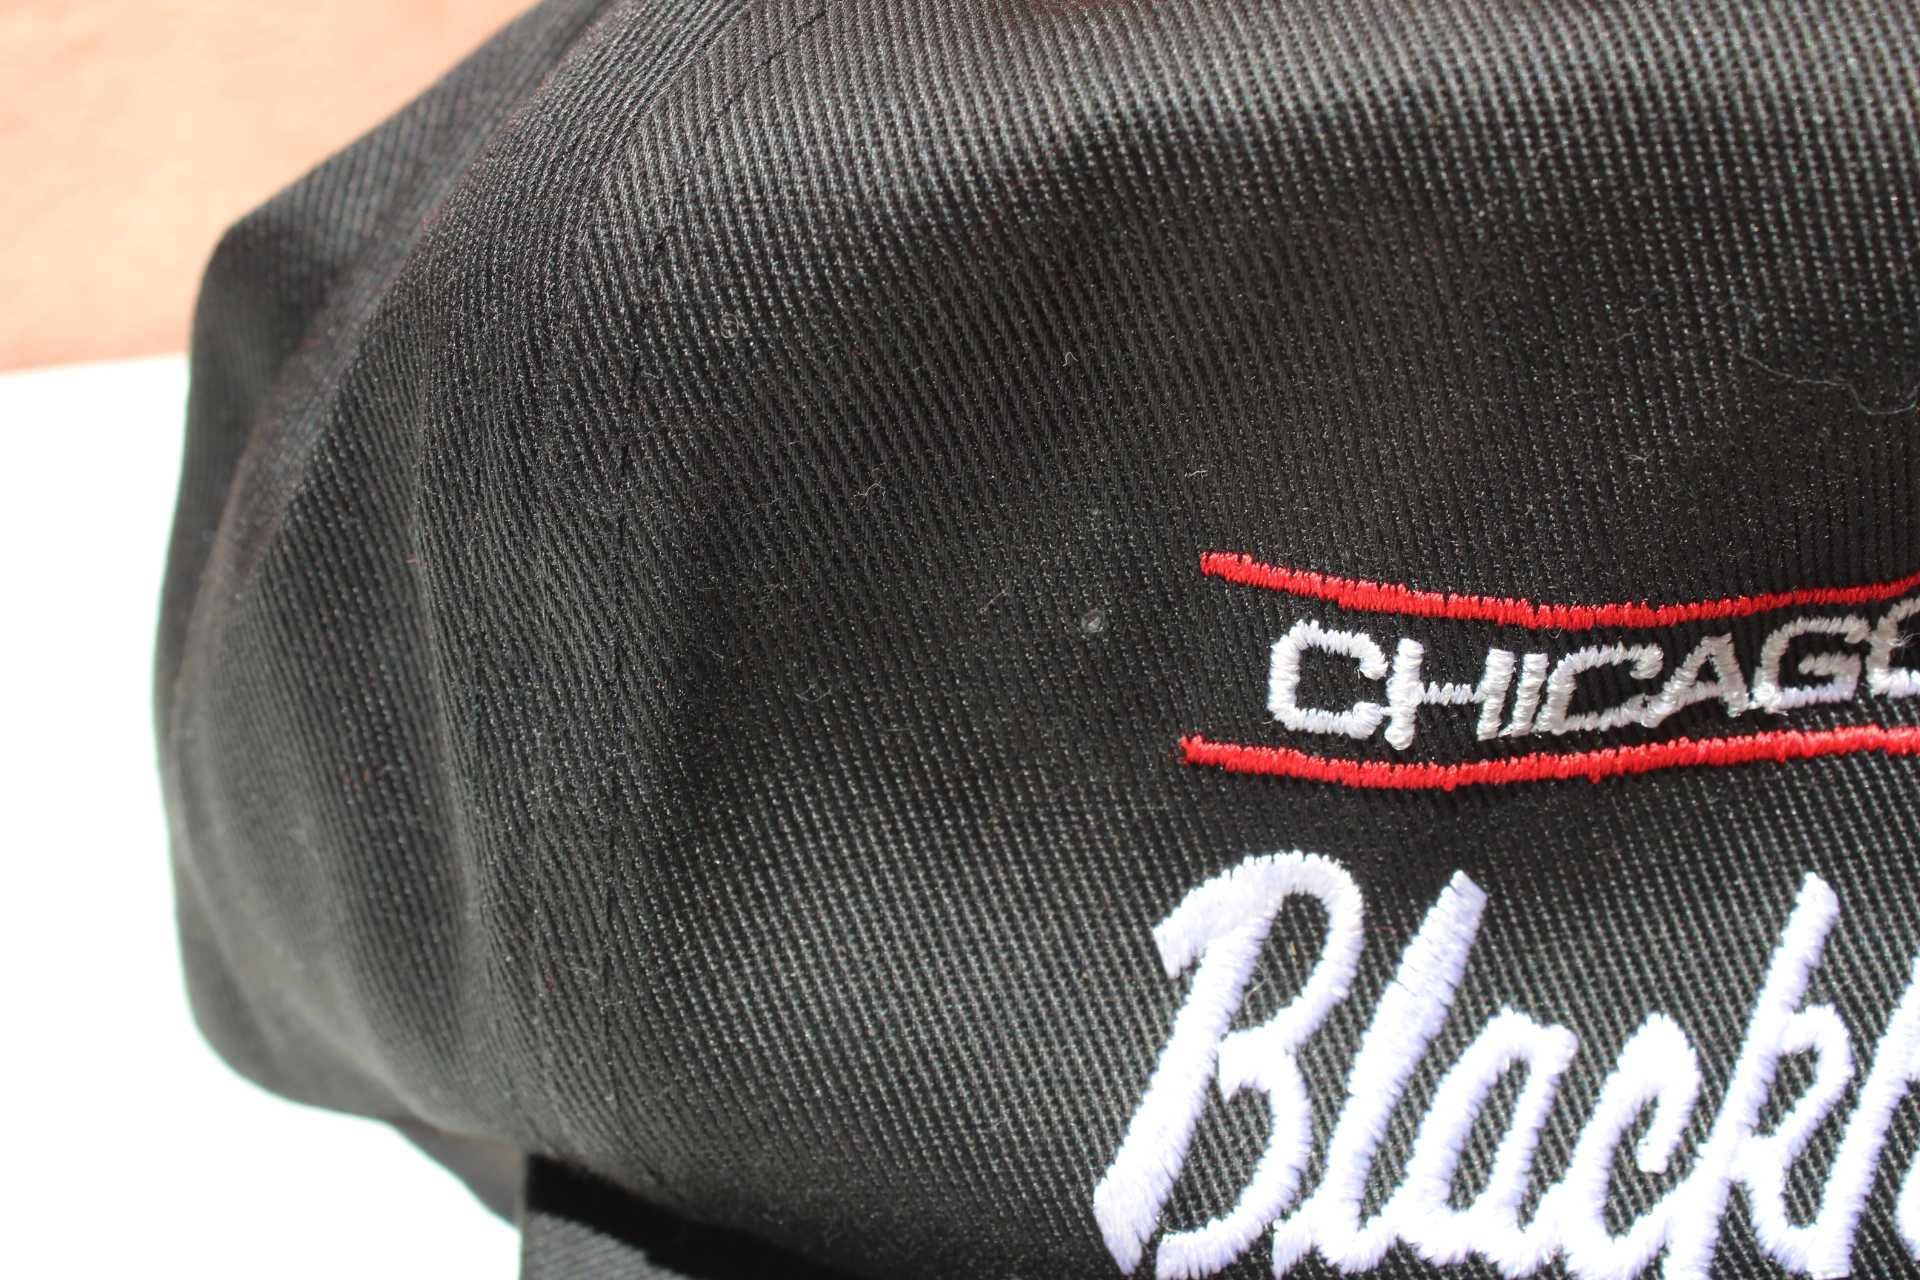 Sapca CHICAGO BLACKHAWKS, anii 90, Snapback, NHL